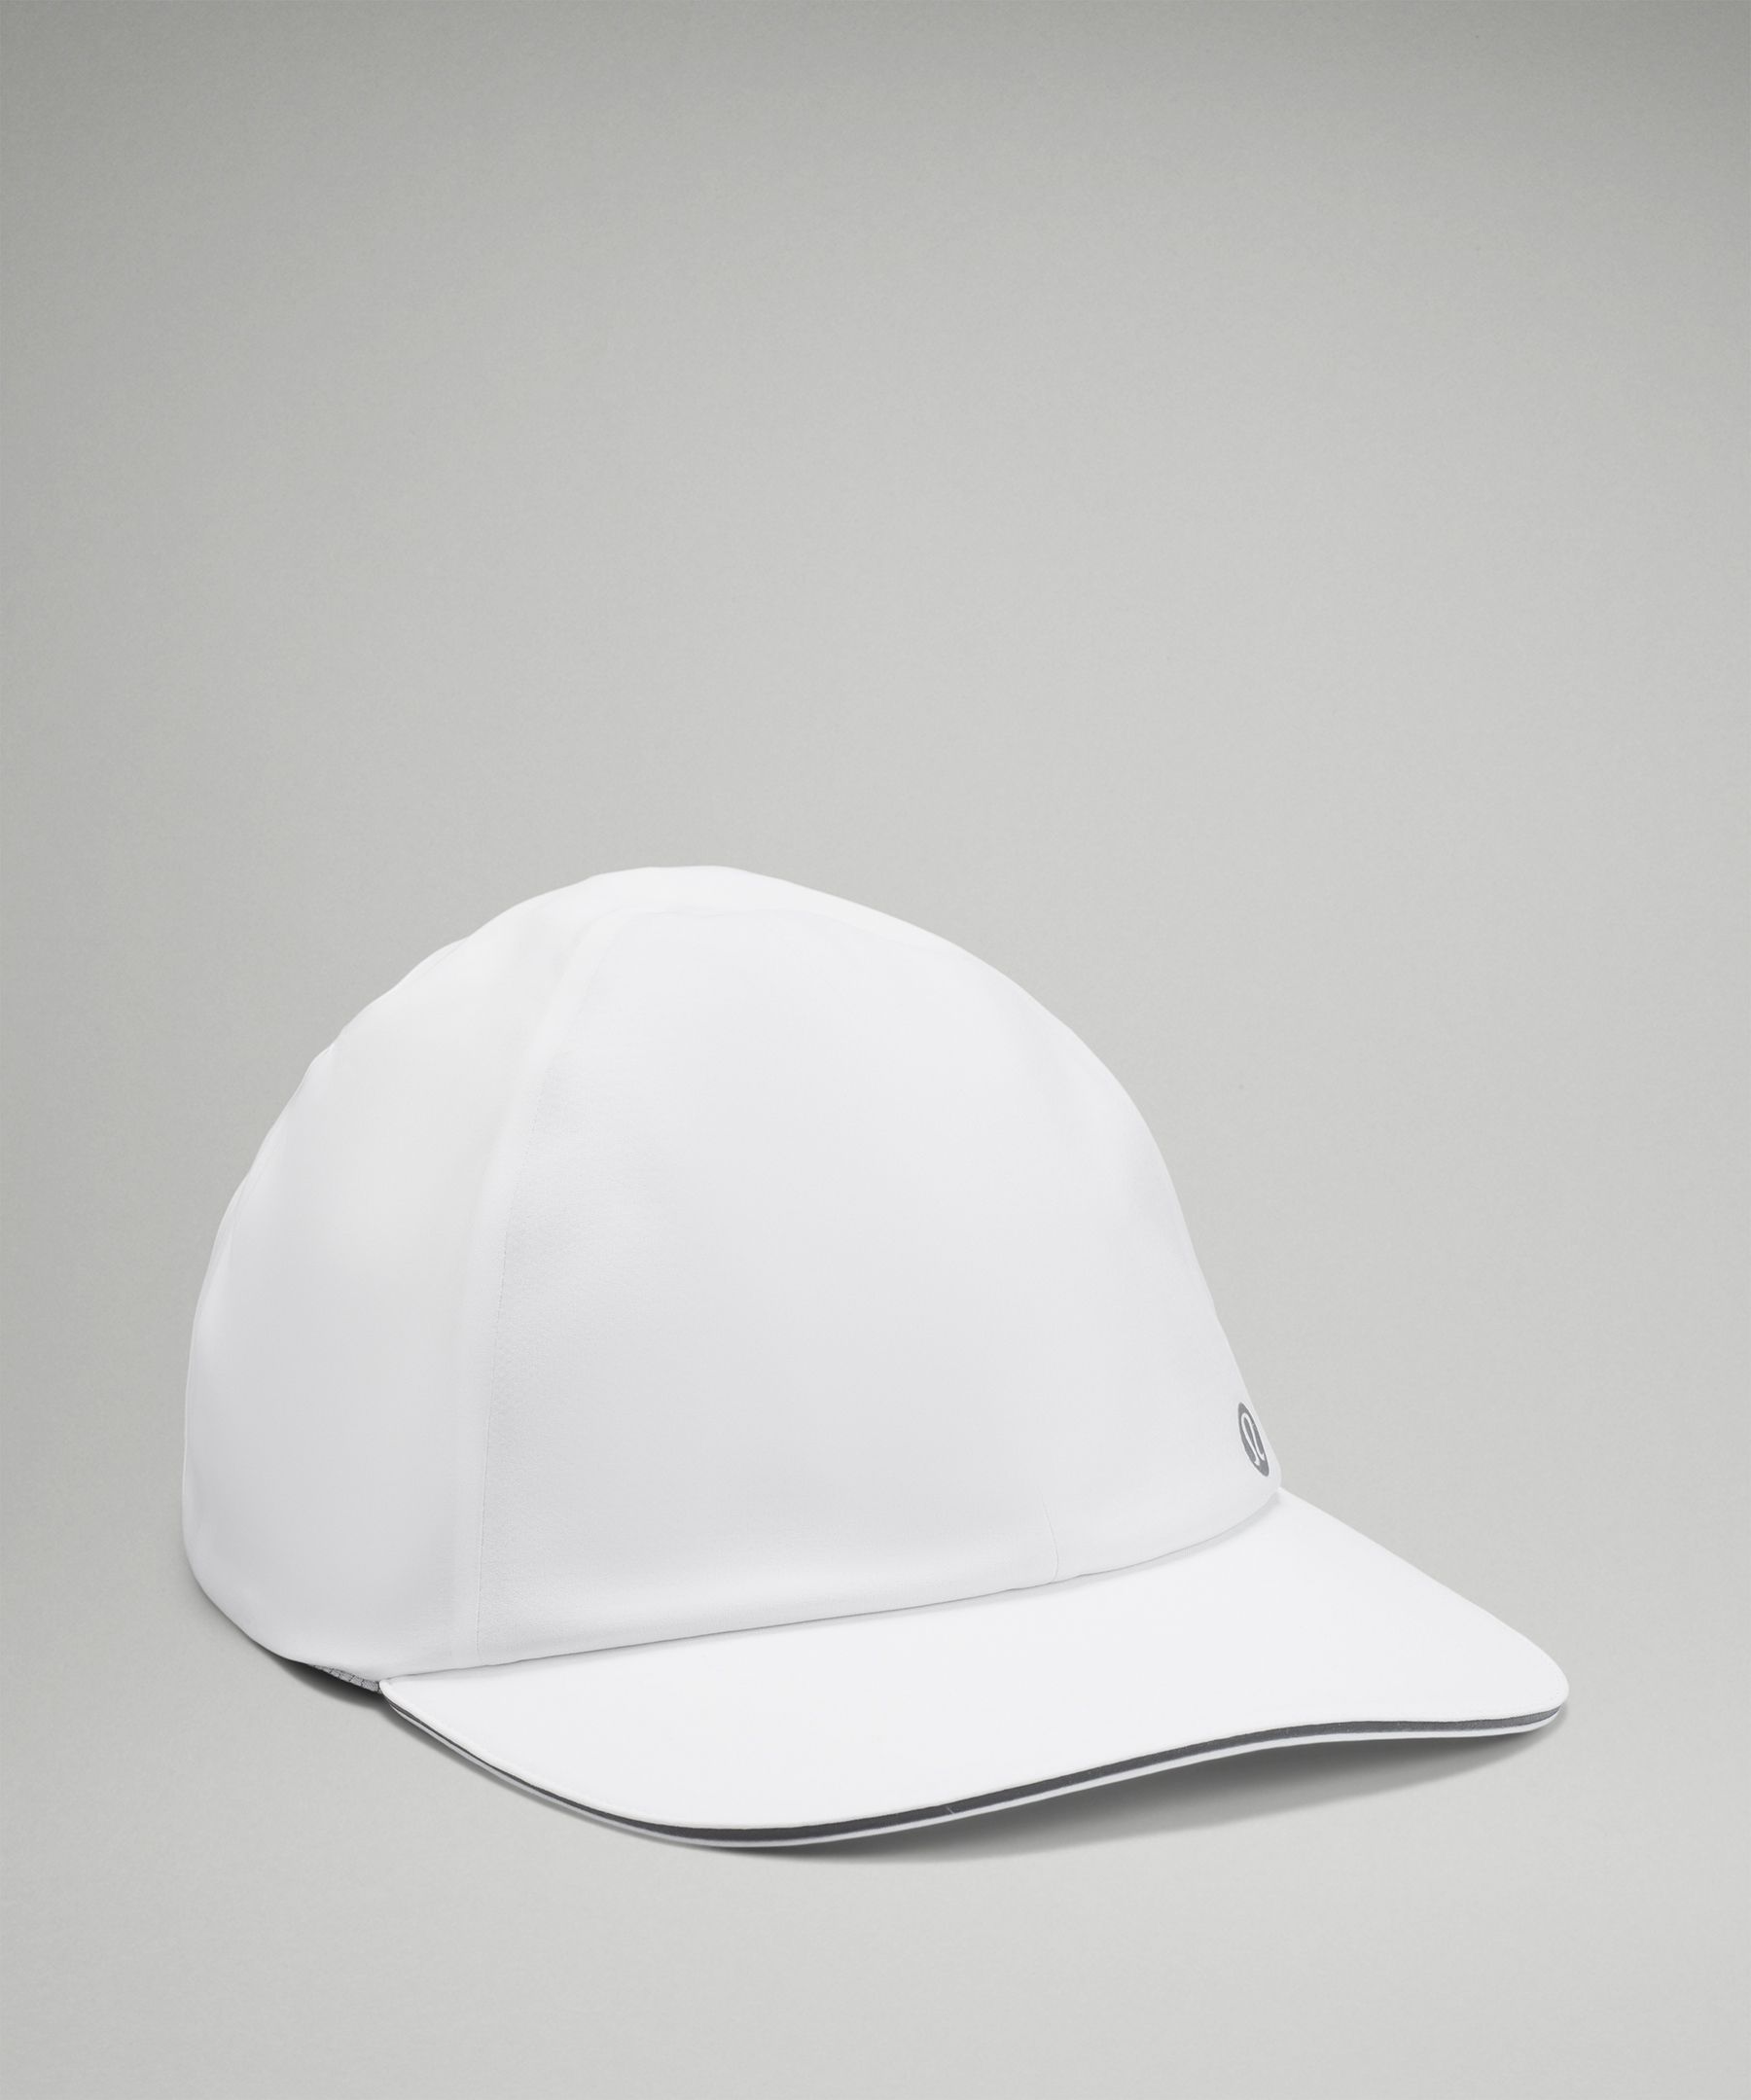 lululemon white hat